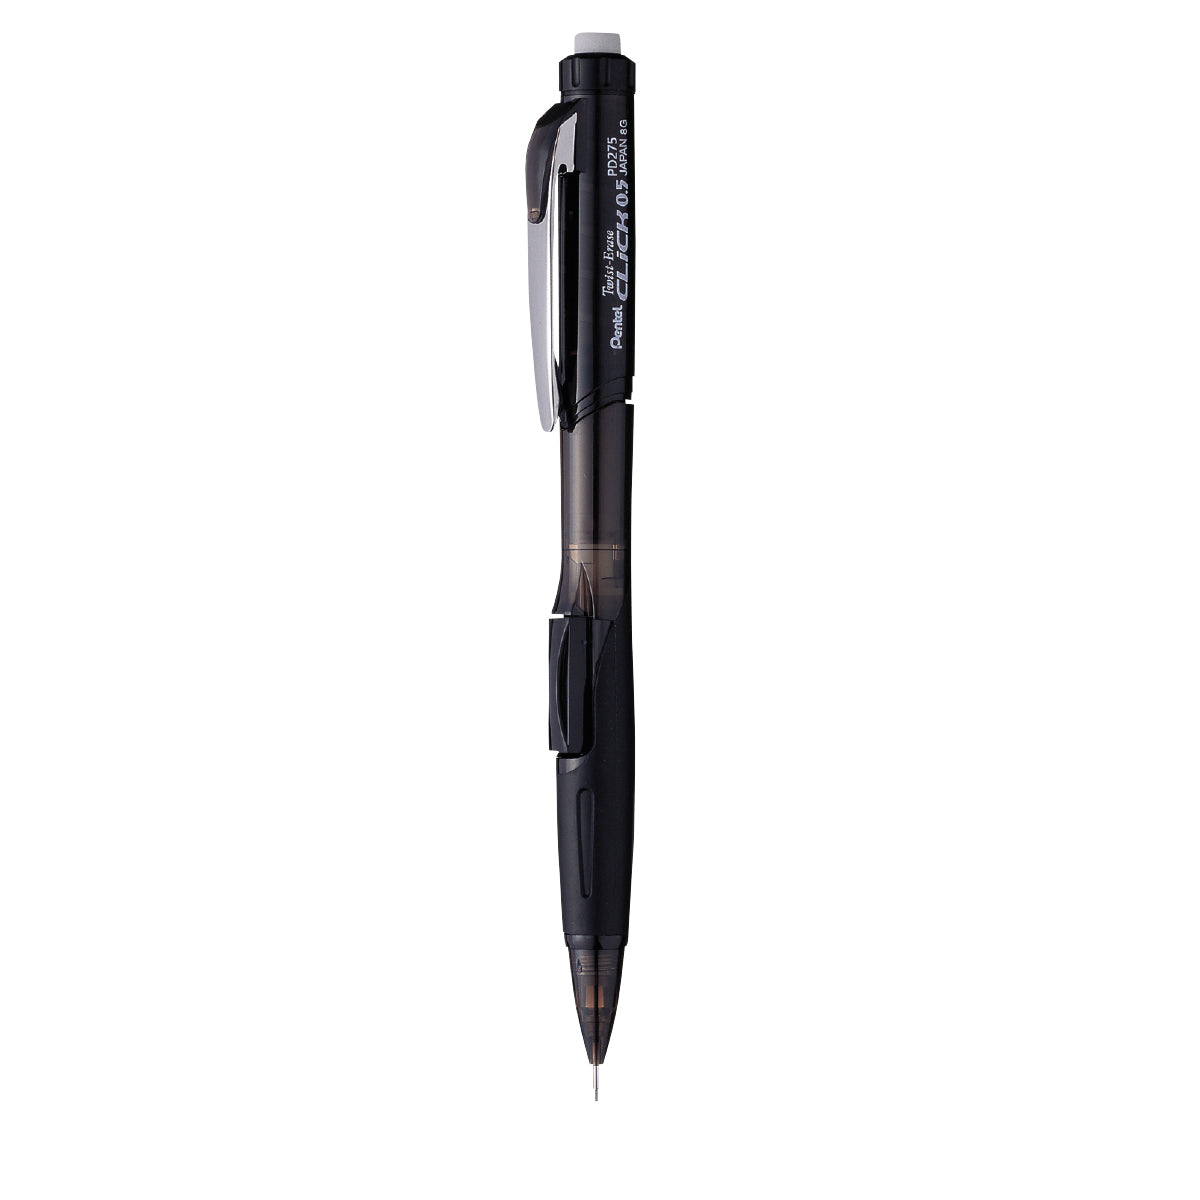 Shop Mechanical Draft Pencil online in Abu Dhabi, UAE